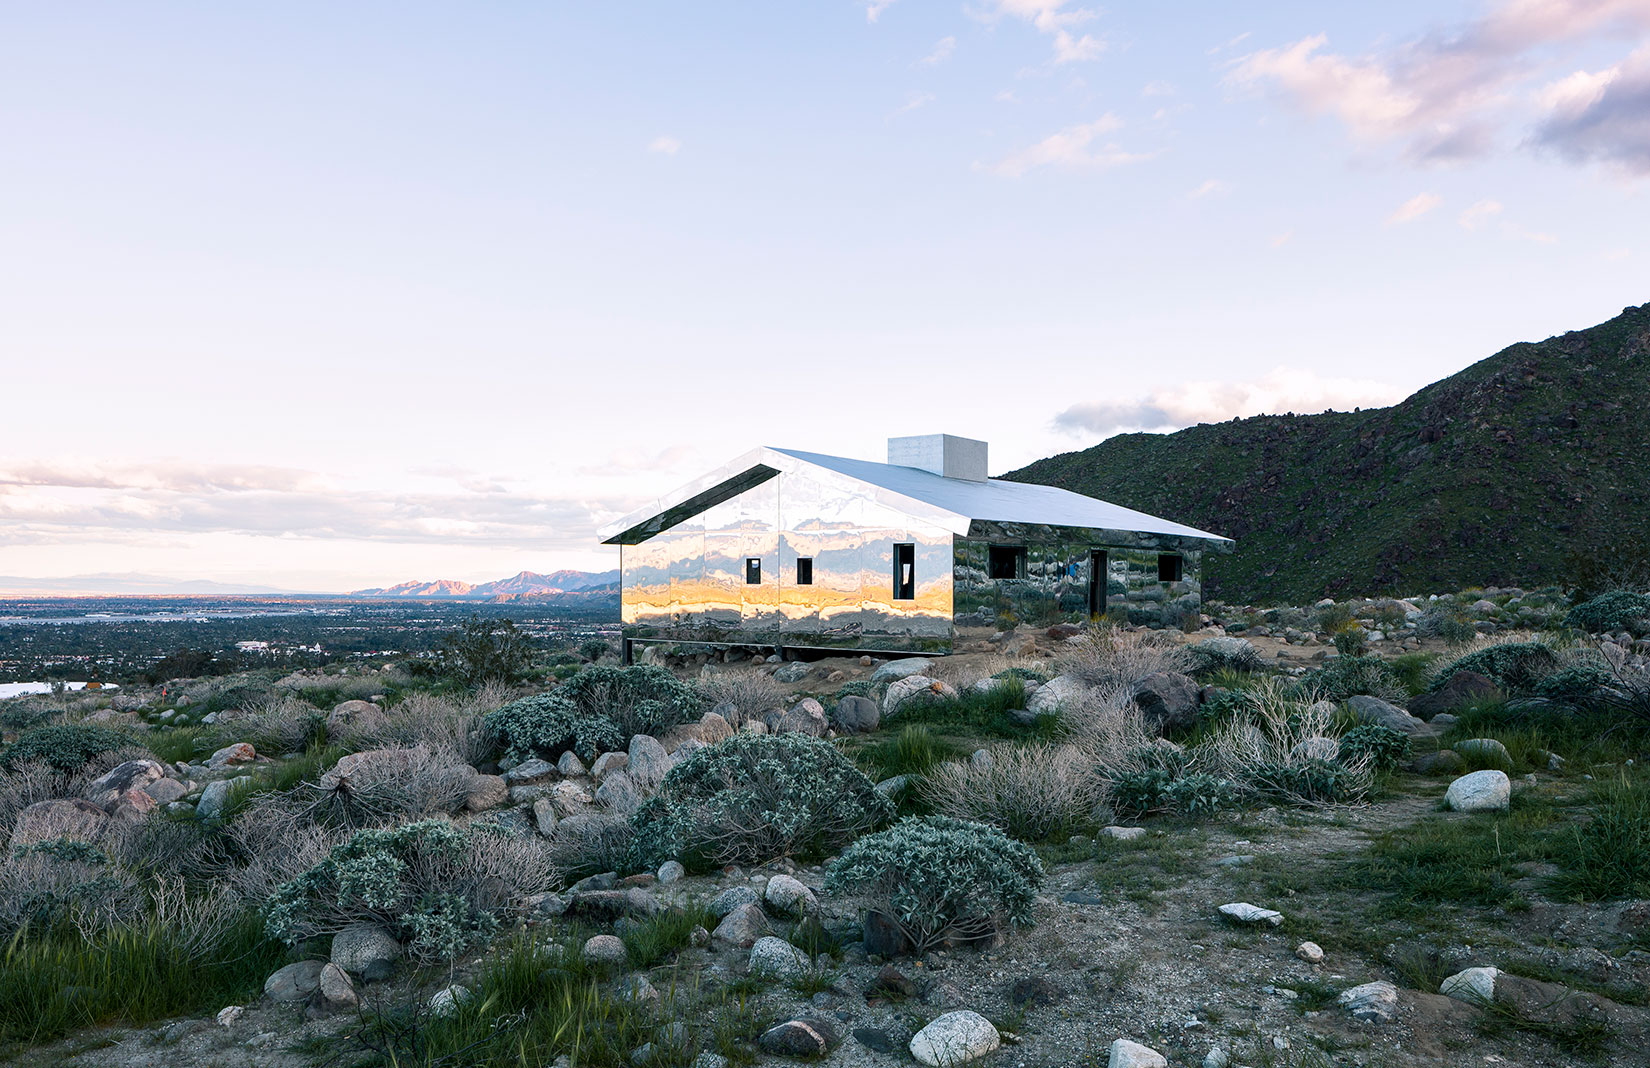 Doug Aitken's Mirage installation at Desert X